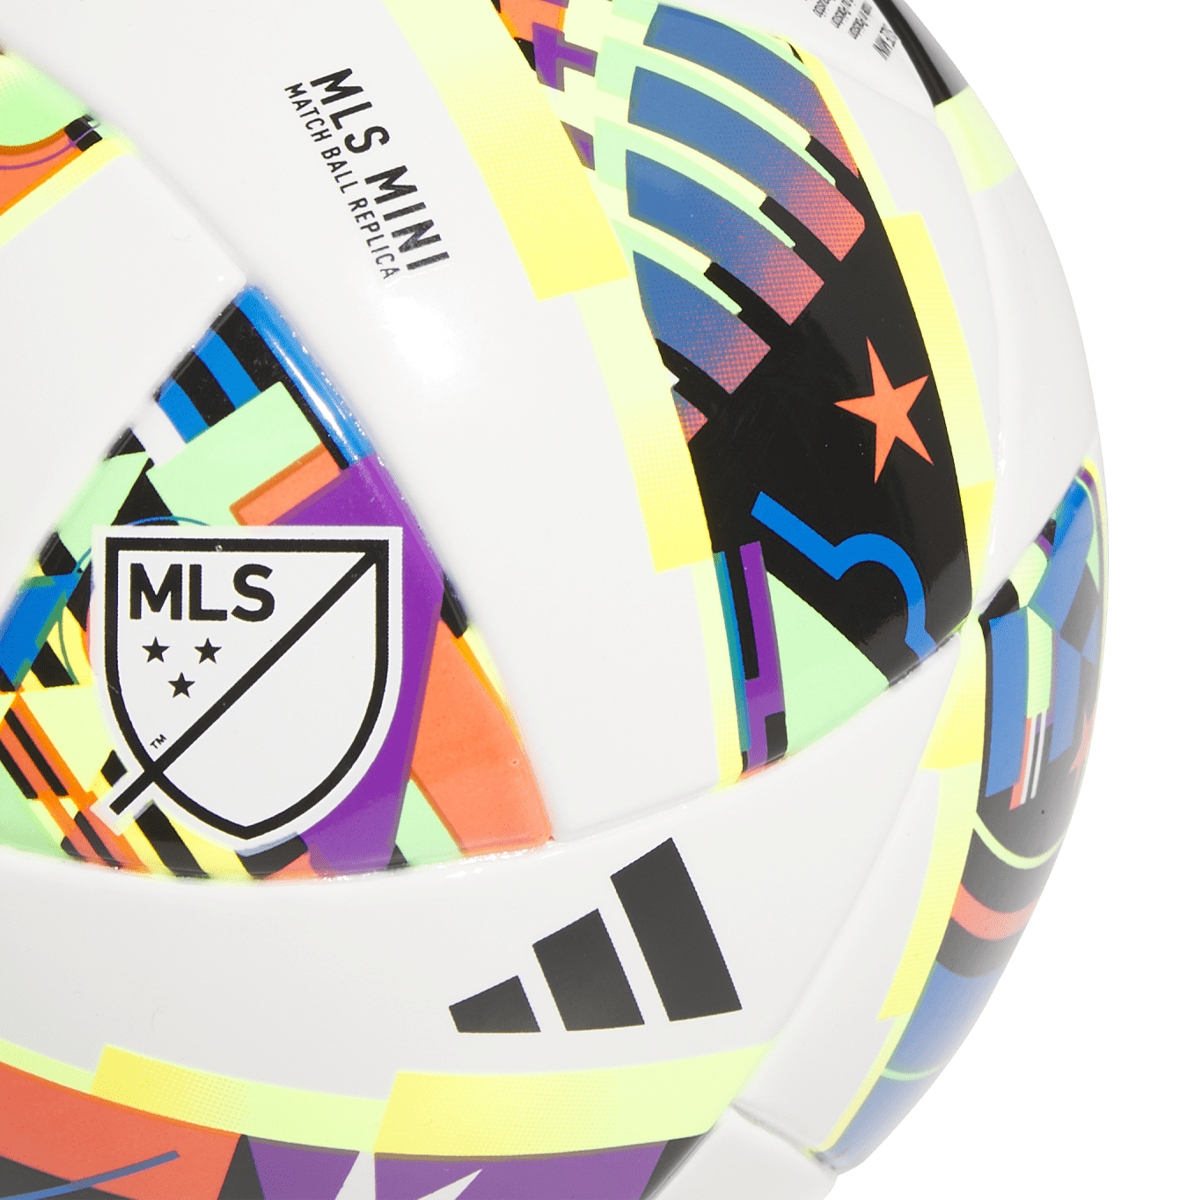 MLS Mini Ball alternate view